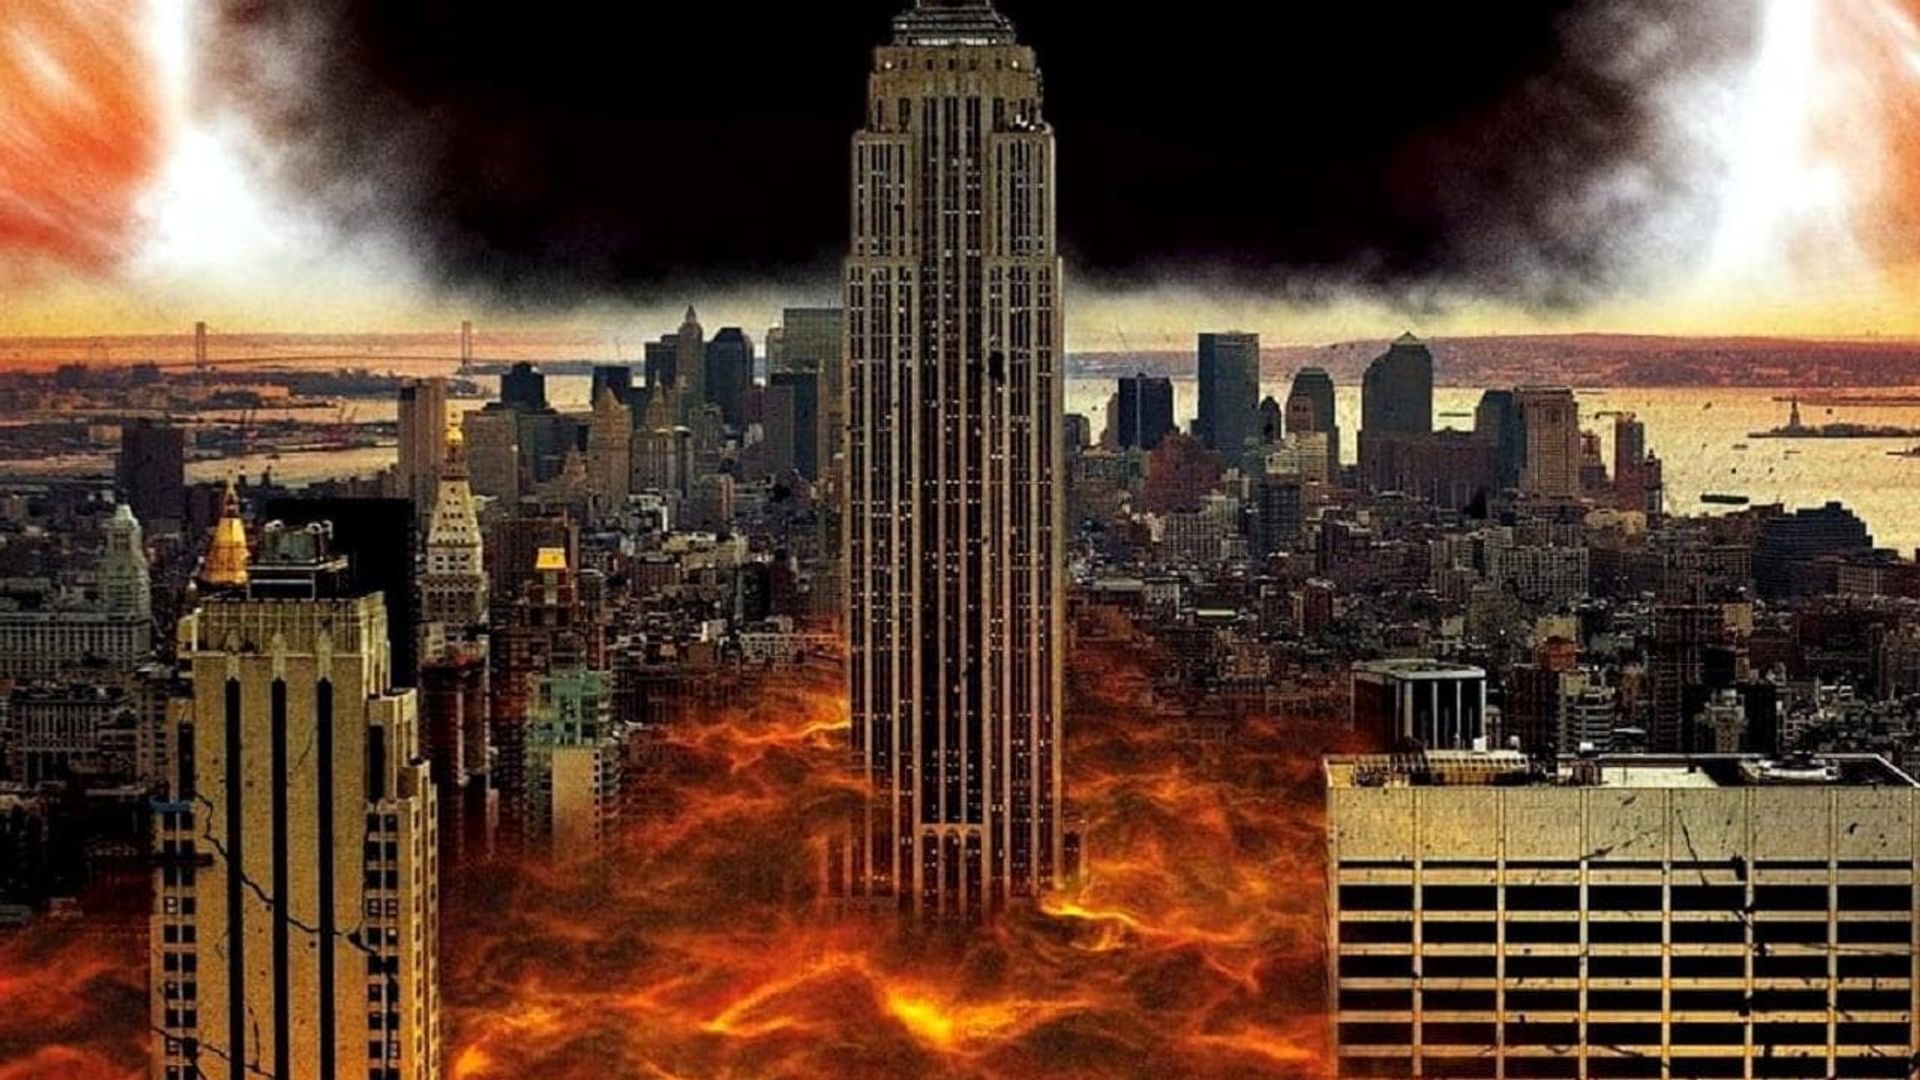 Doomsday Prophecy background